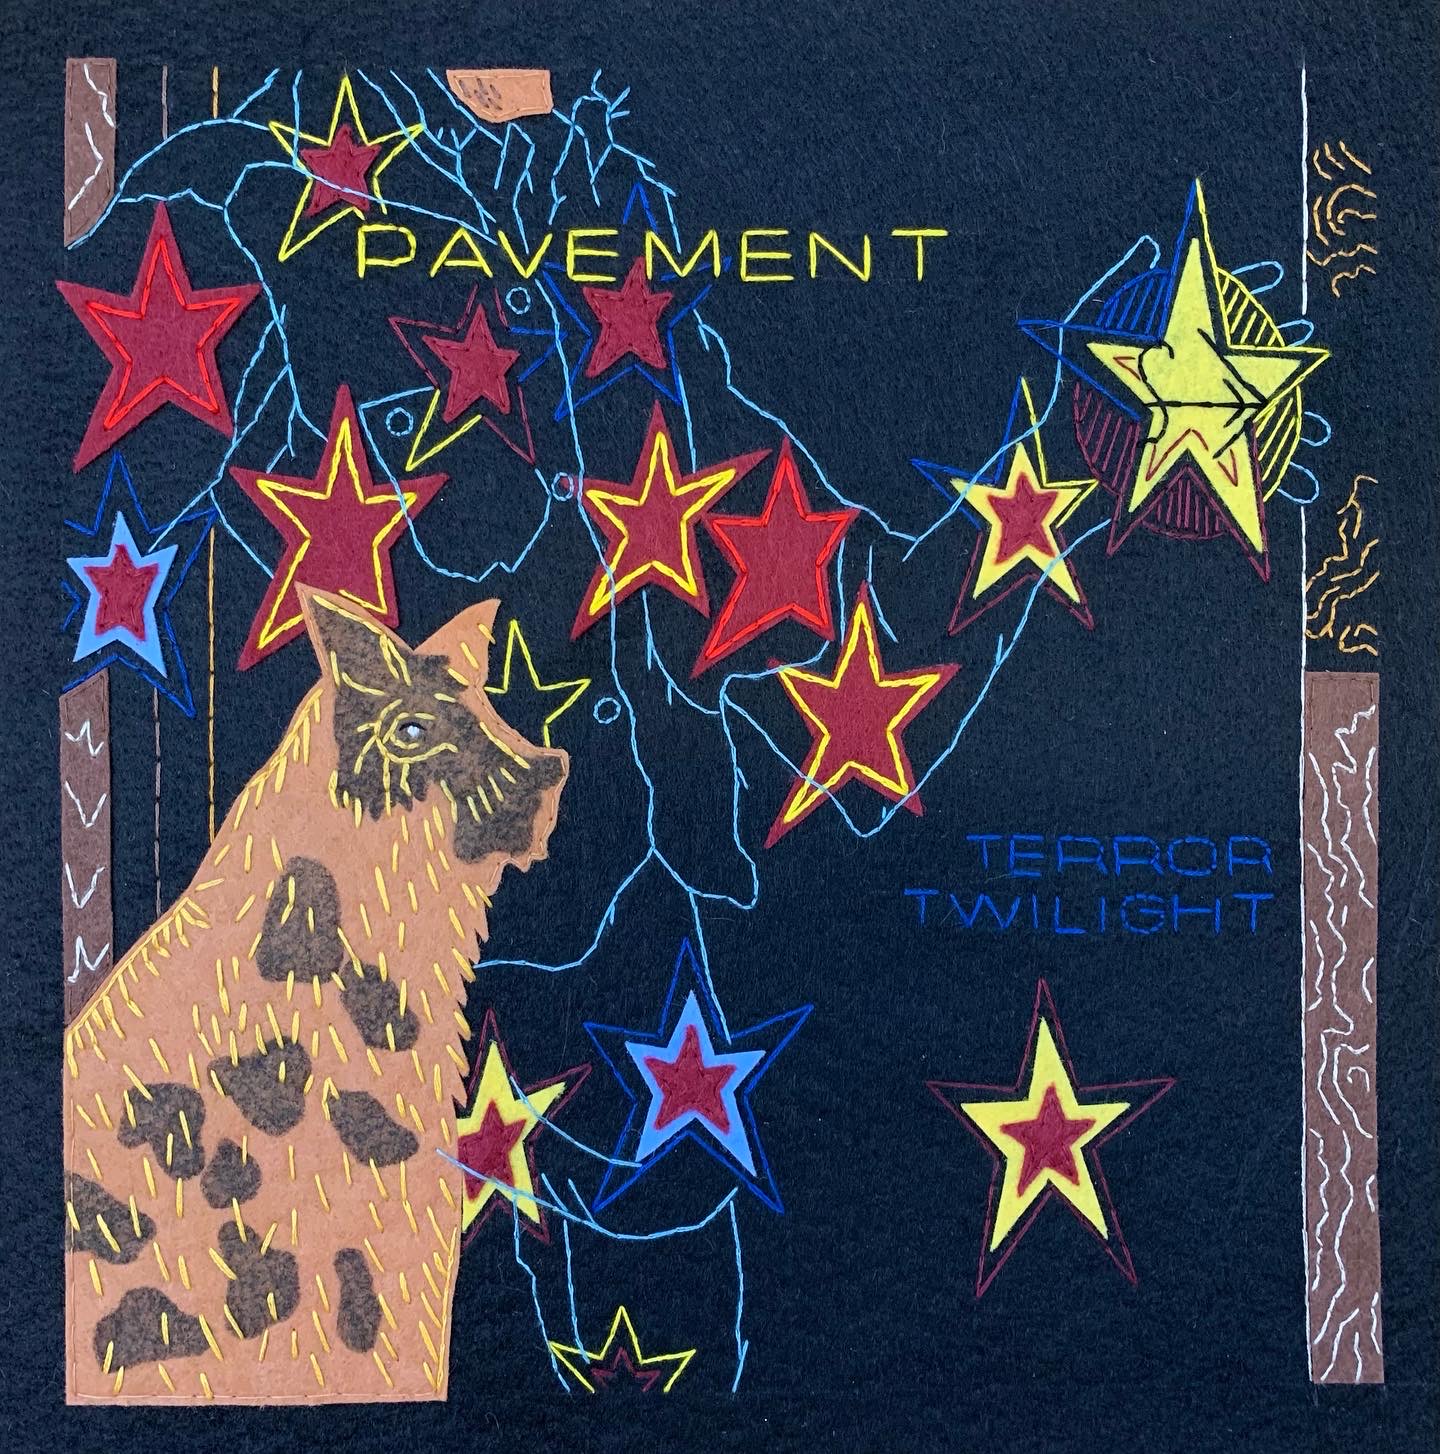 Pavement – Terror Twillight (1999)